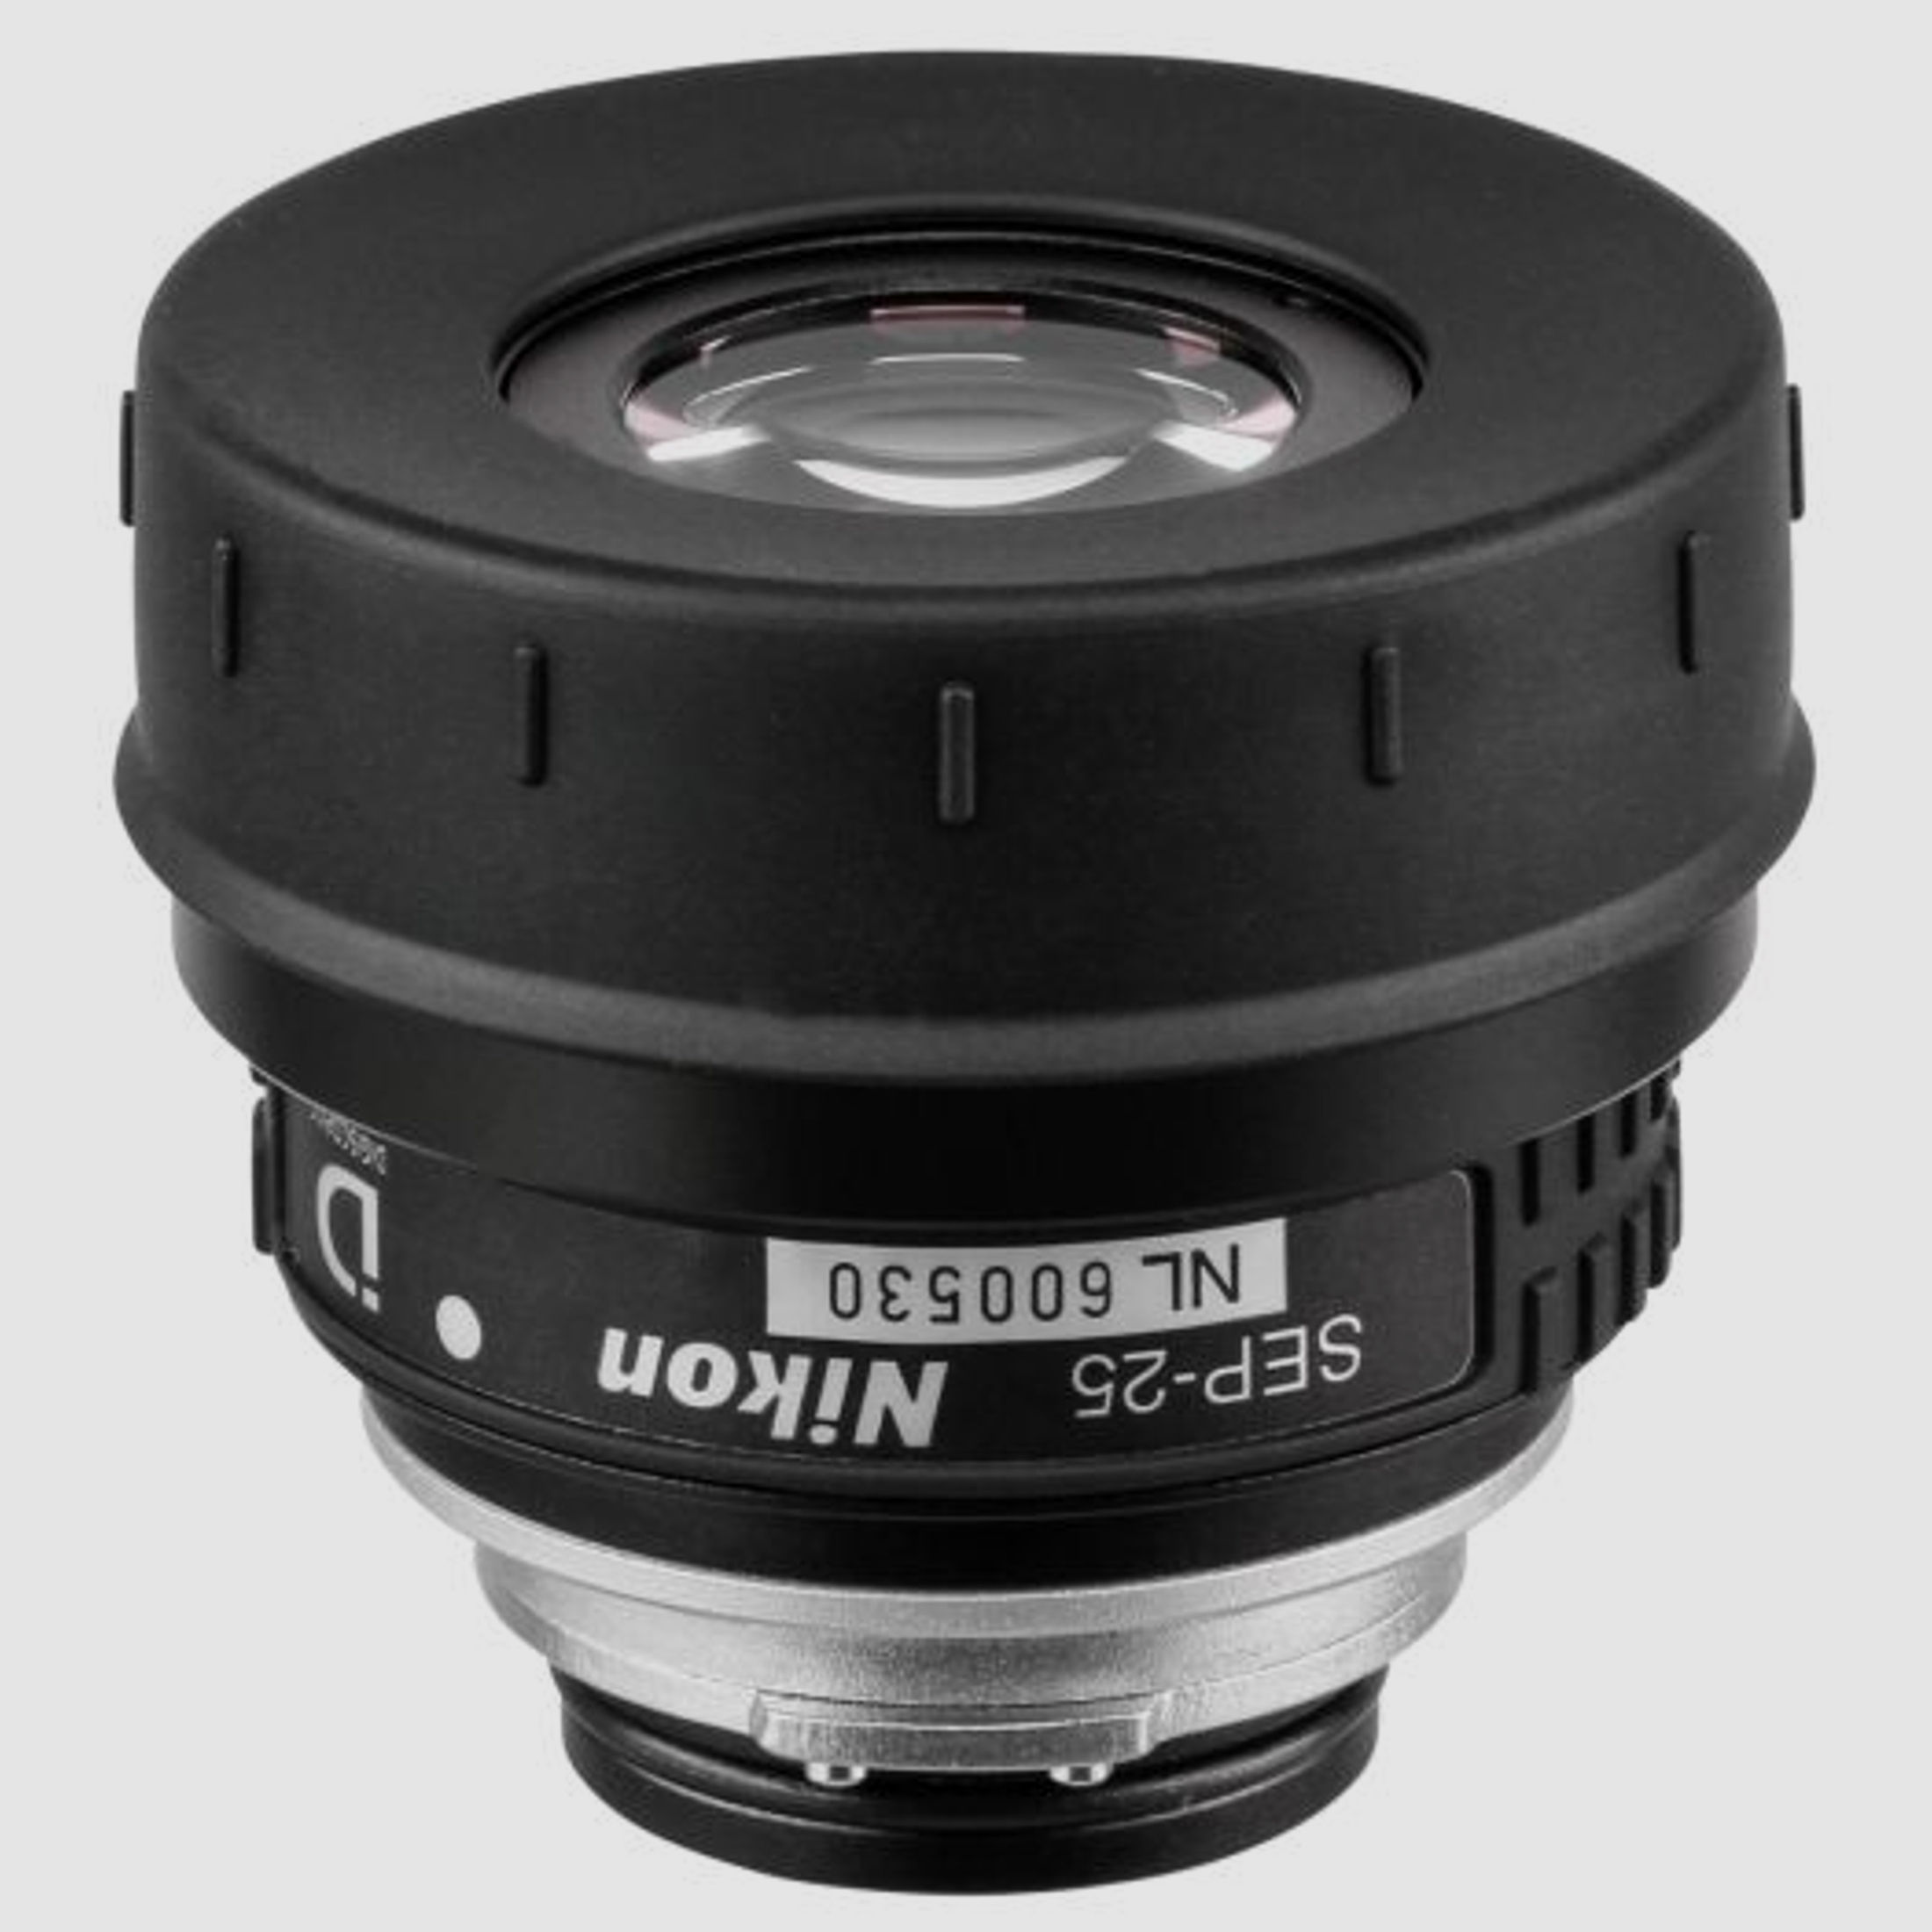 Nikon Nikon Wechselokular SEP 20x/25x -4,97€ 5% Fernglas Rabatt 94,52 Effektivpreis